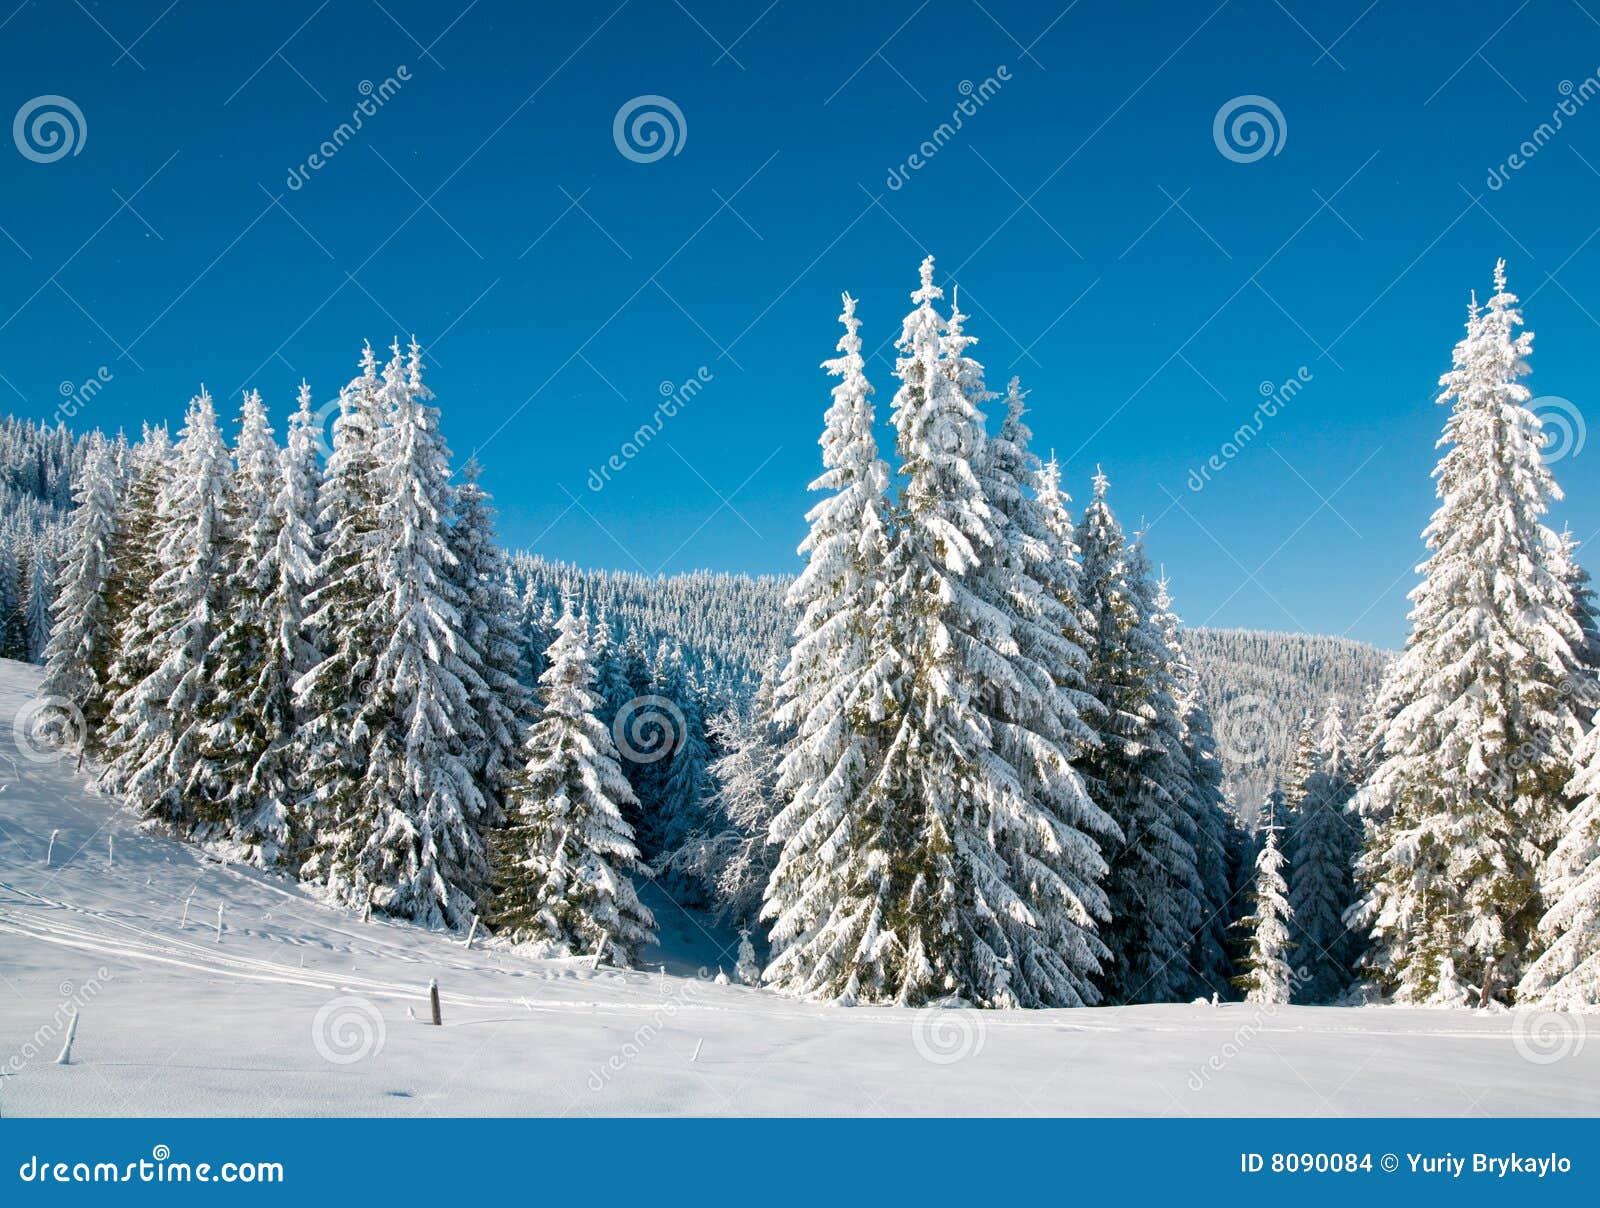 winter-spruce-trees-8090084.jpg